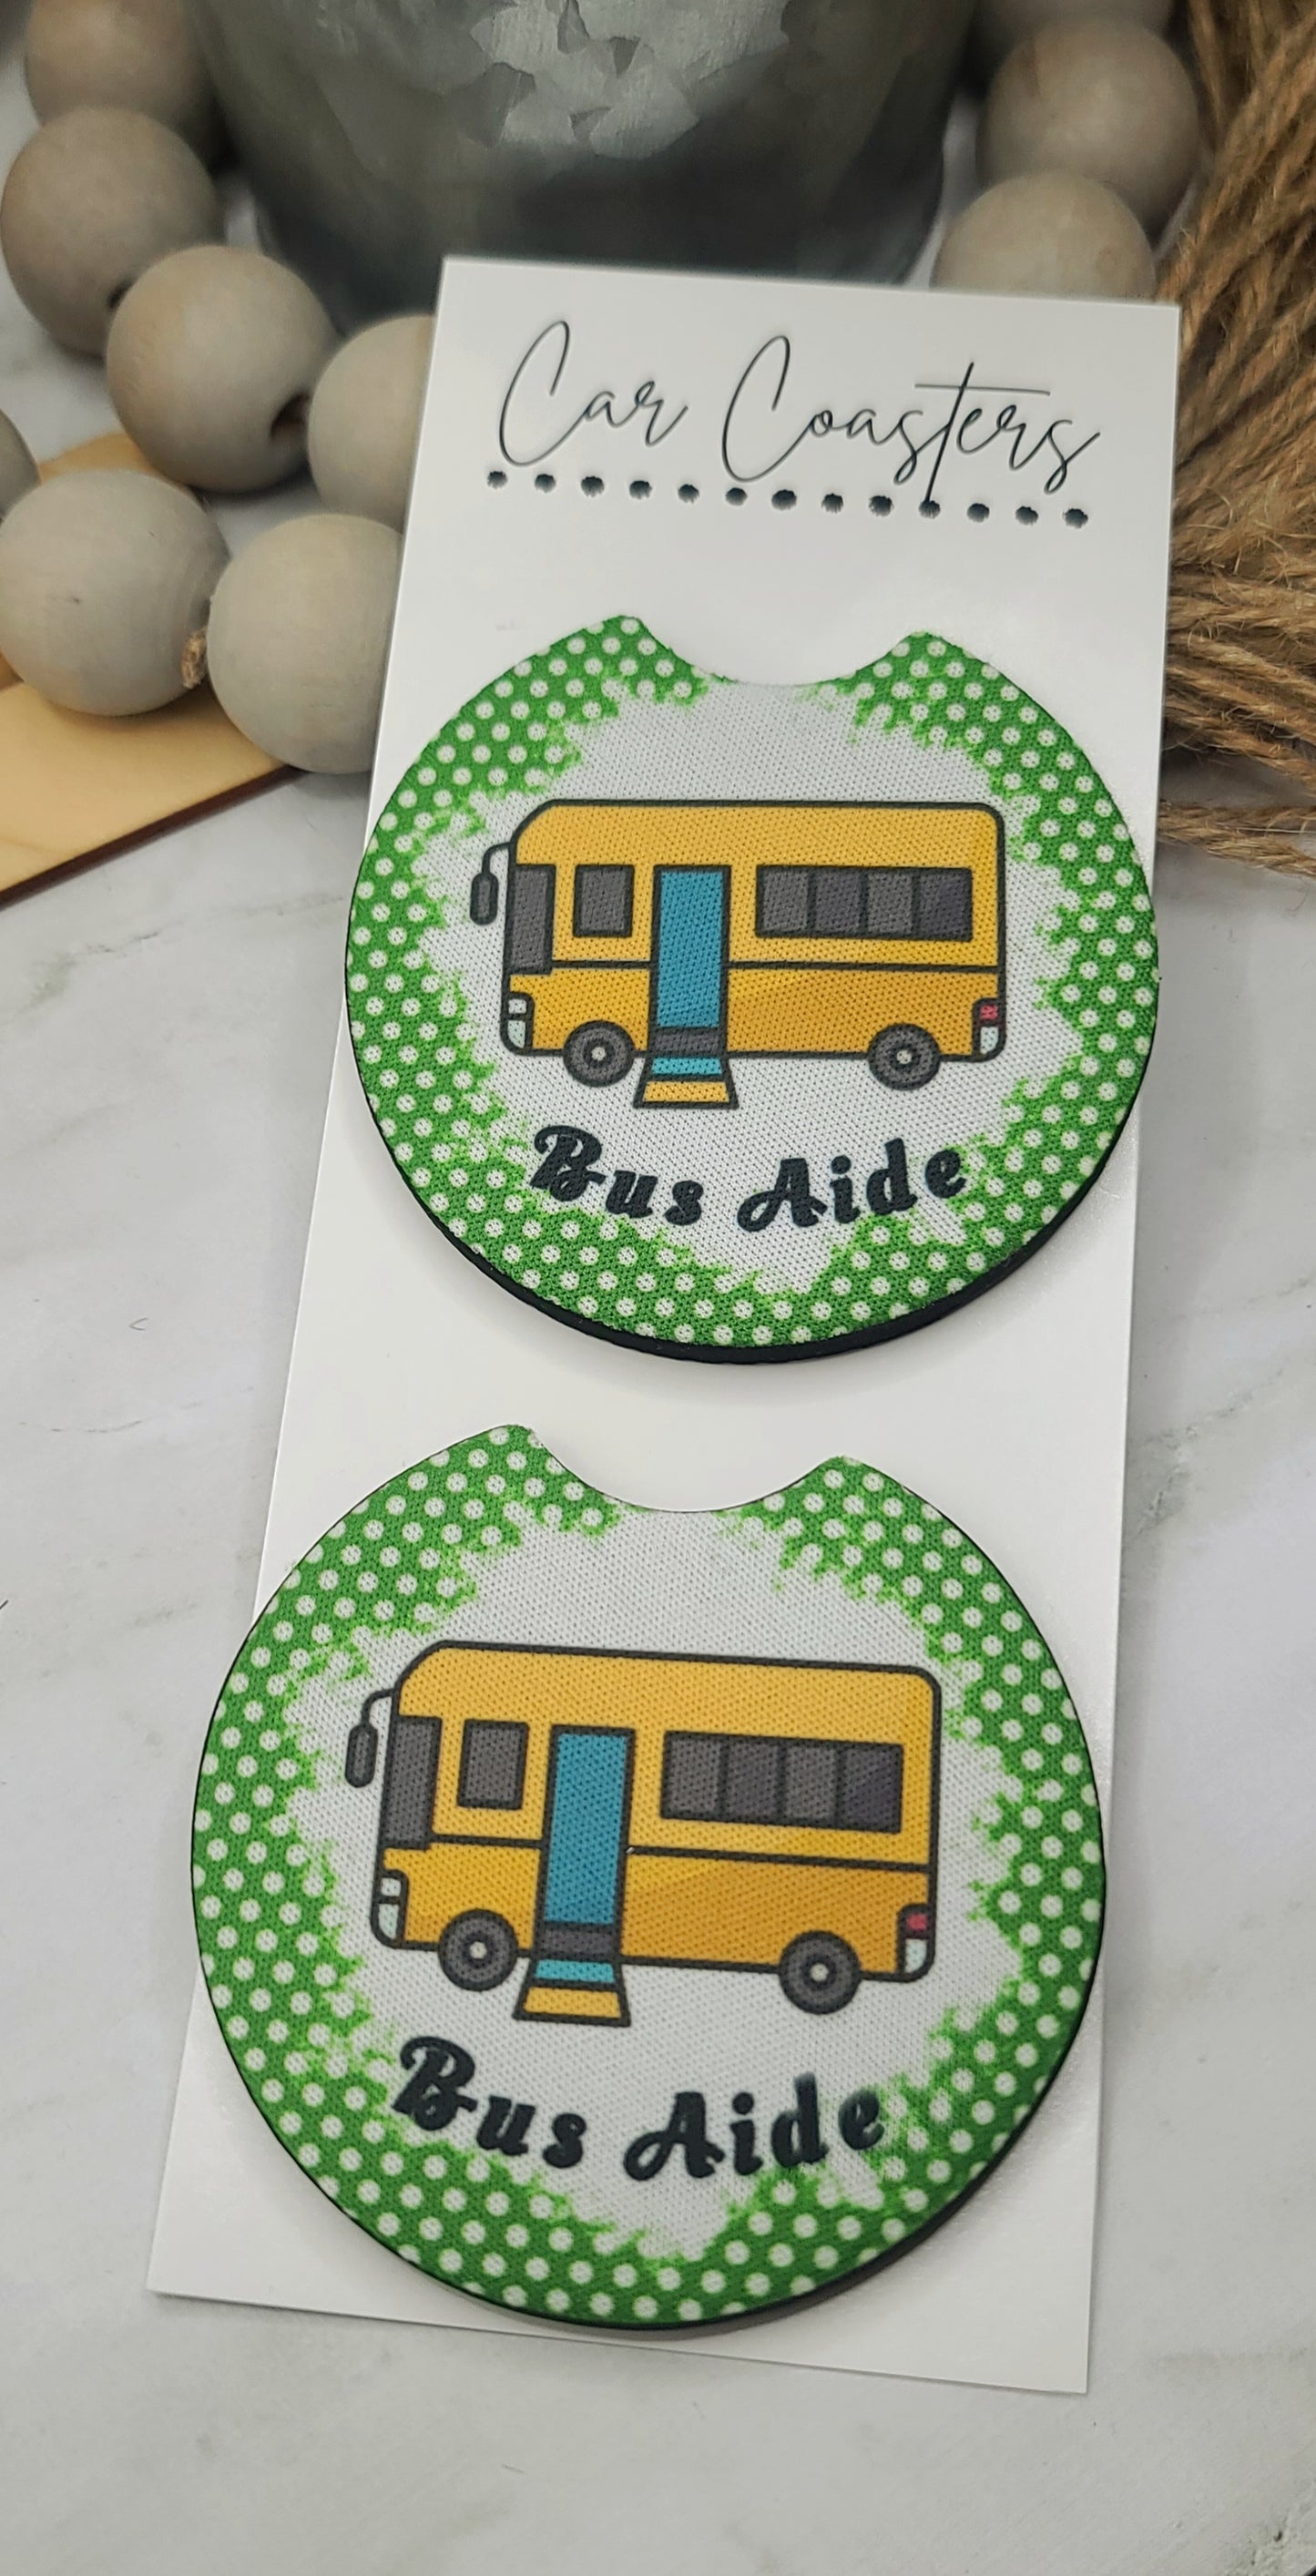 Bus Aide Car Coasters